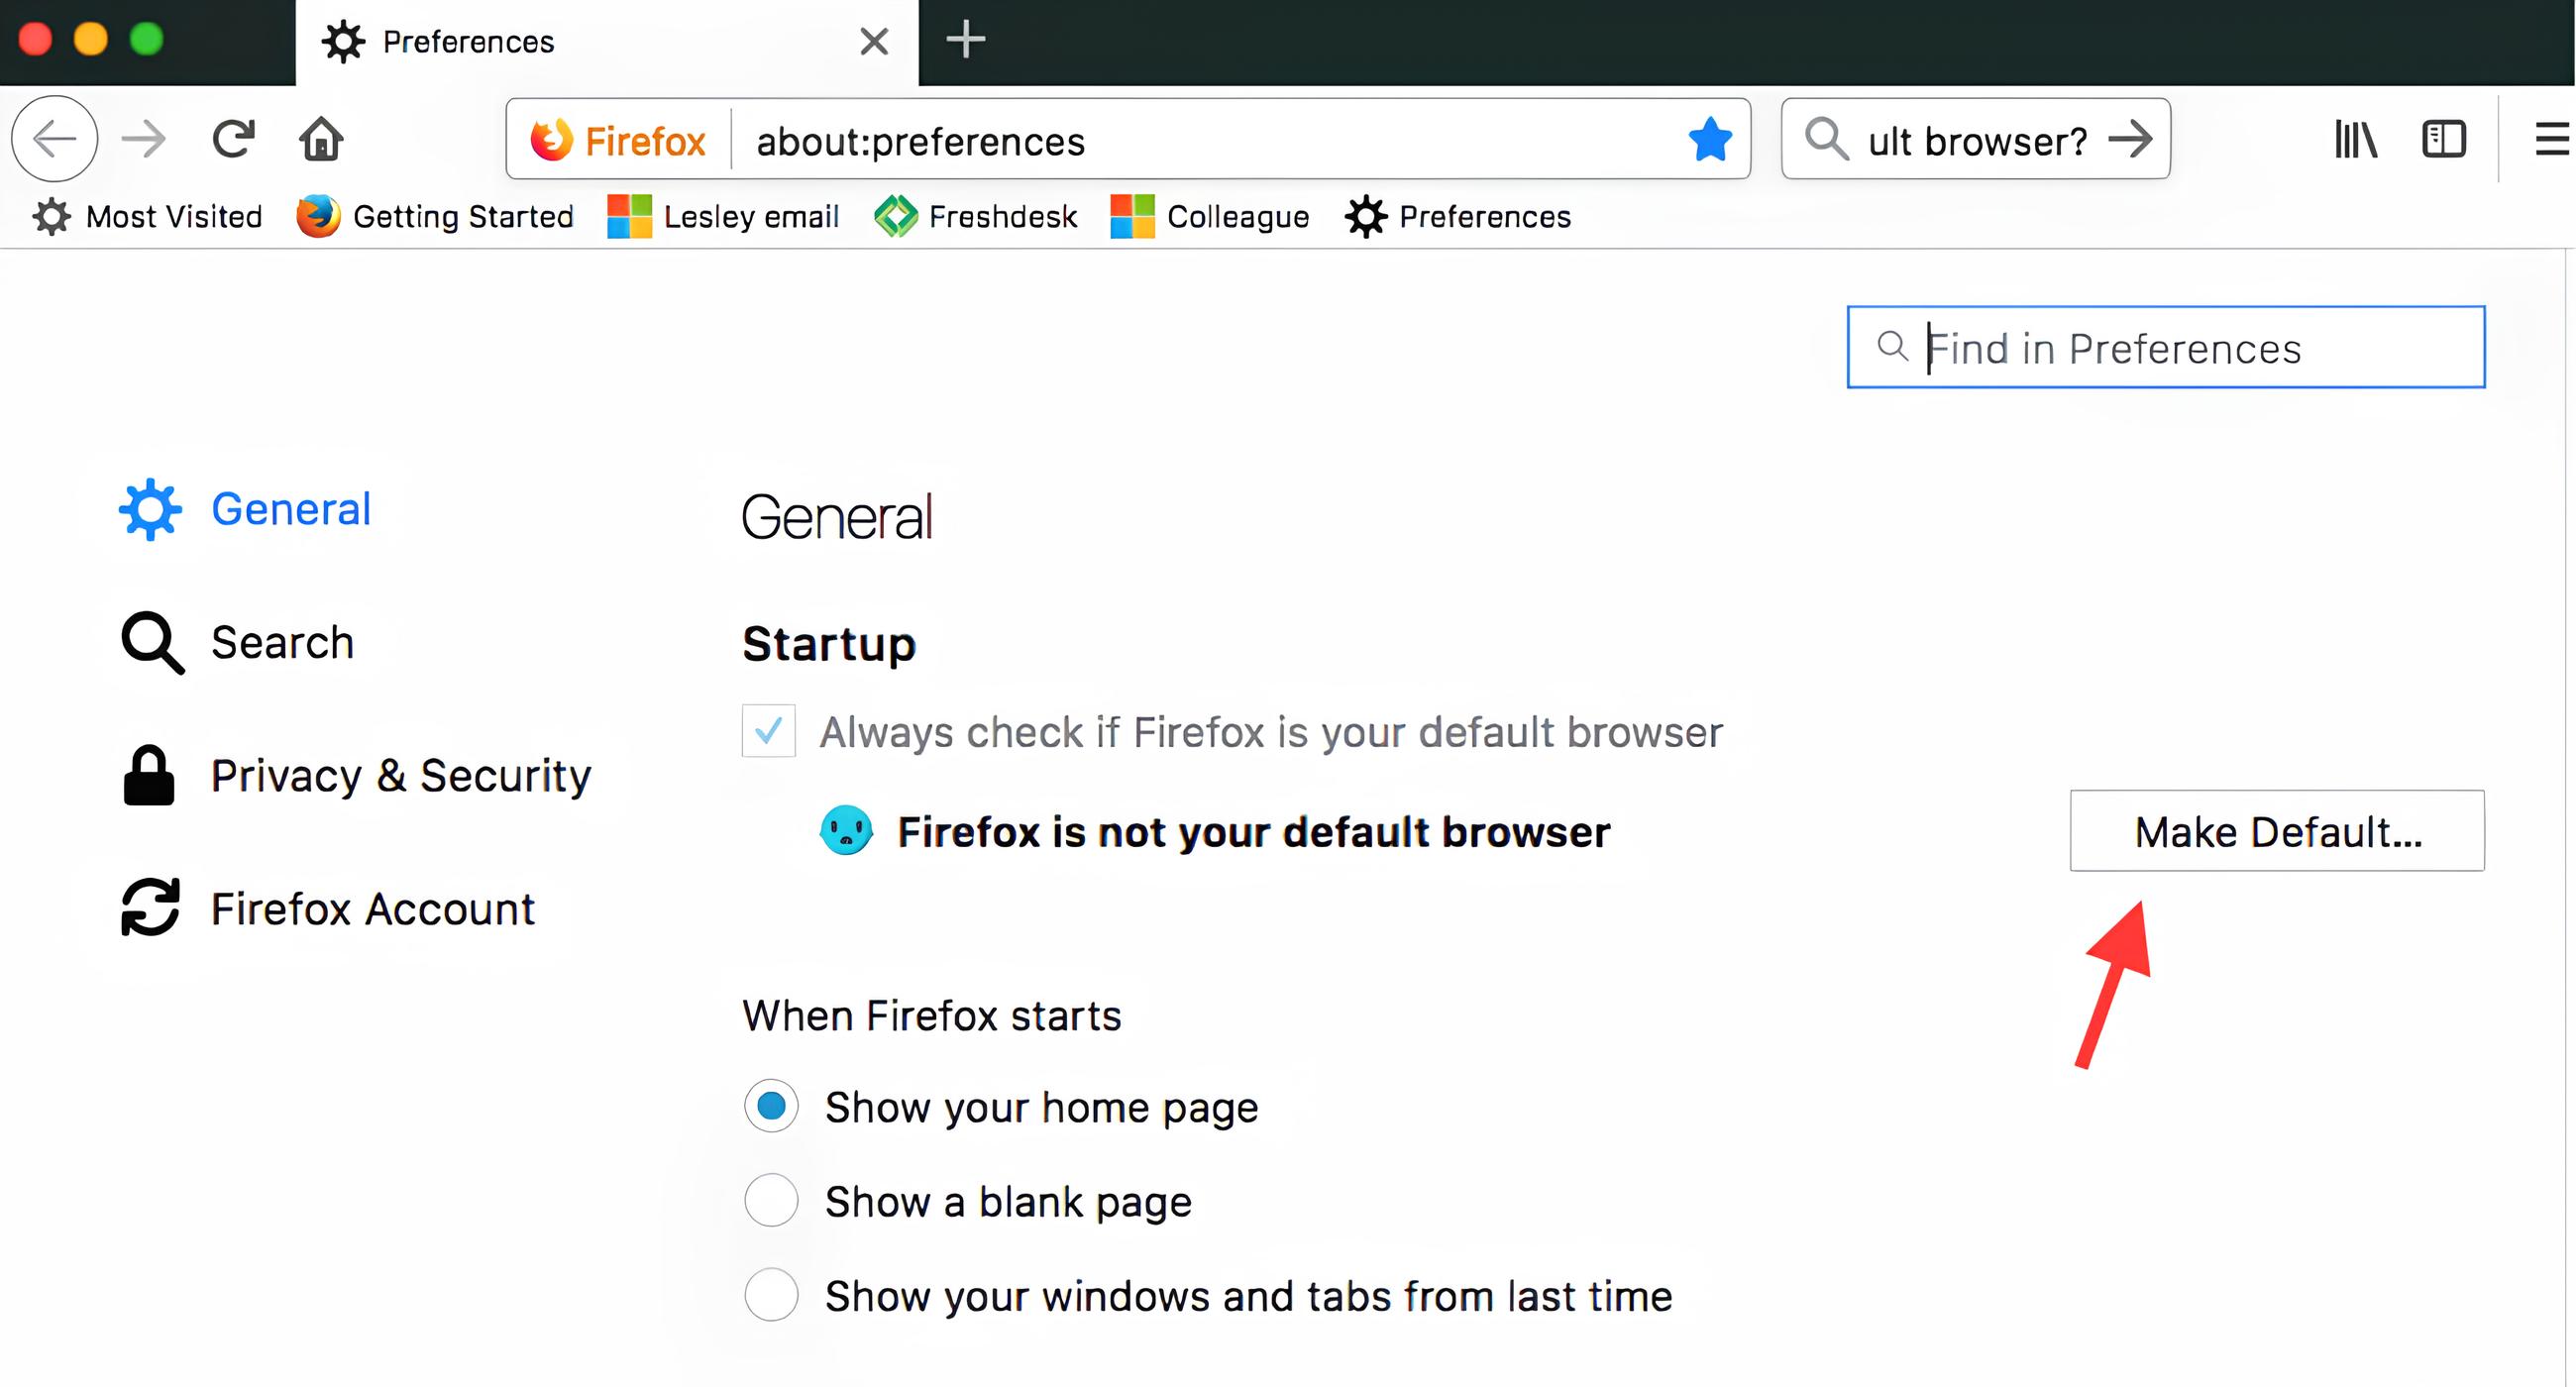 How Do I Make Firefox My Default Browser?